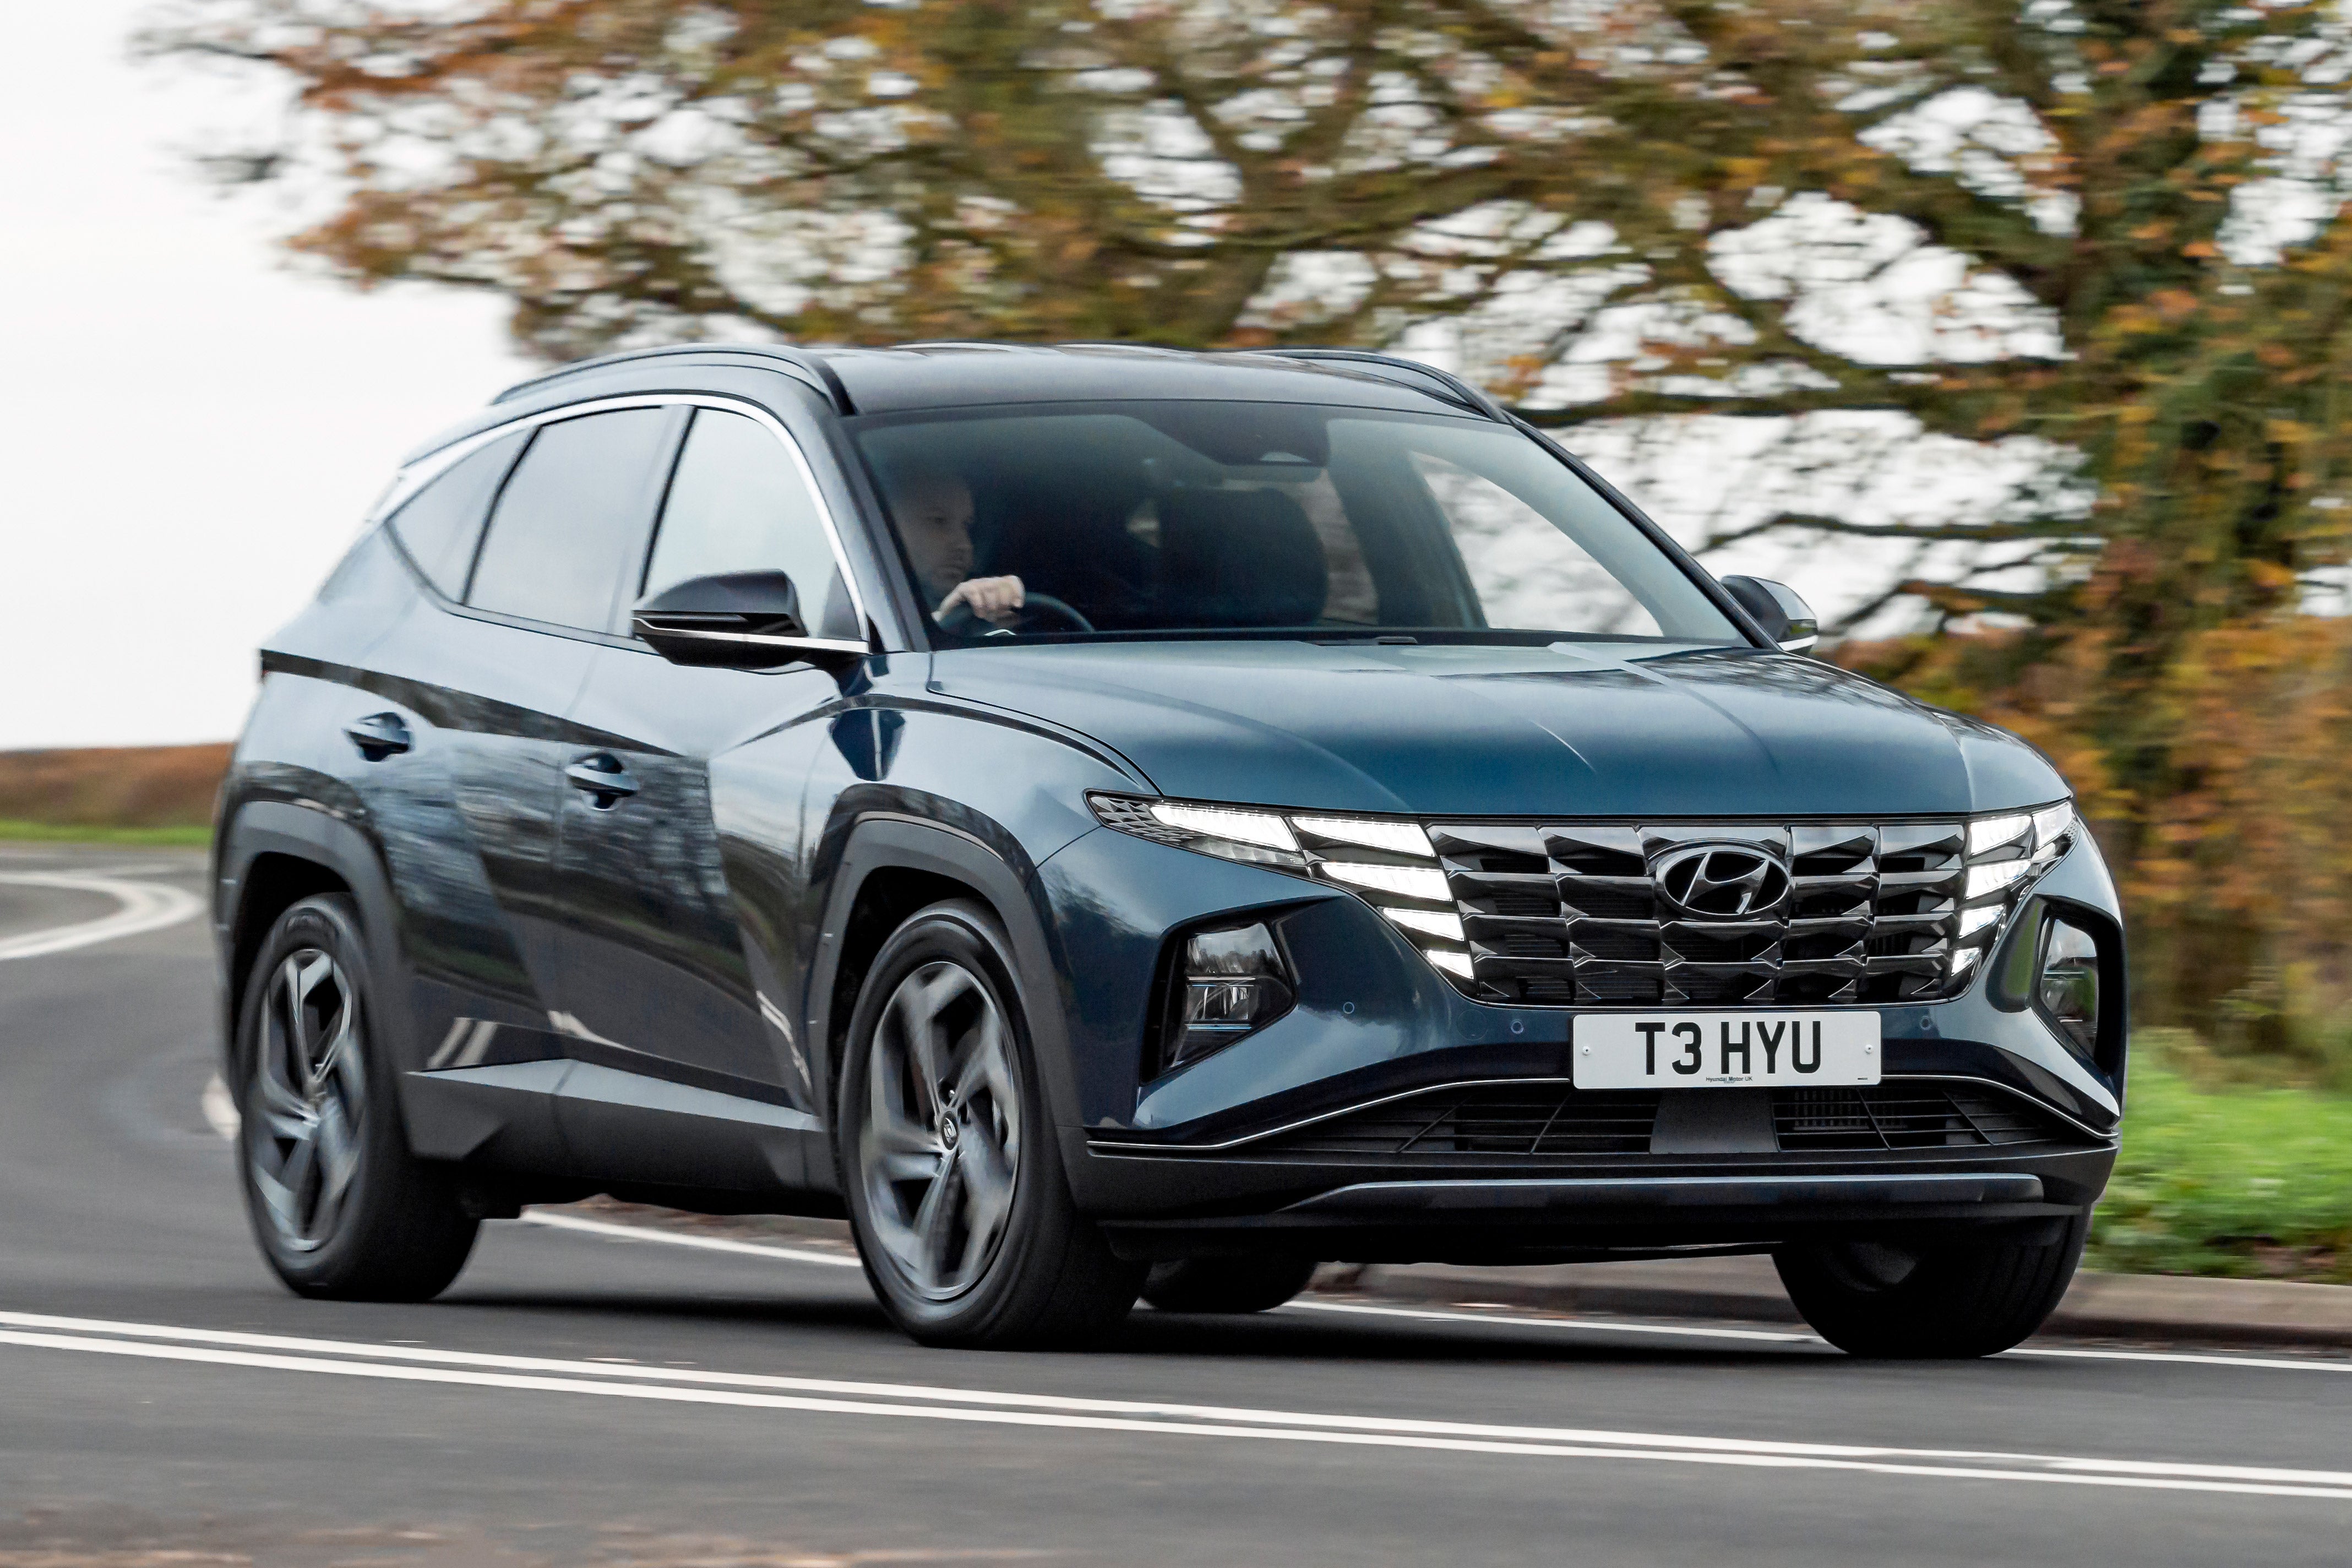 Hyundai Tucson Review 2022: exterior dynamic front